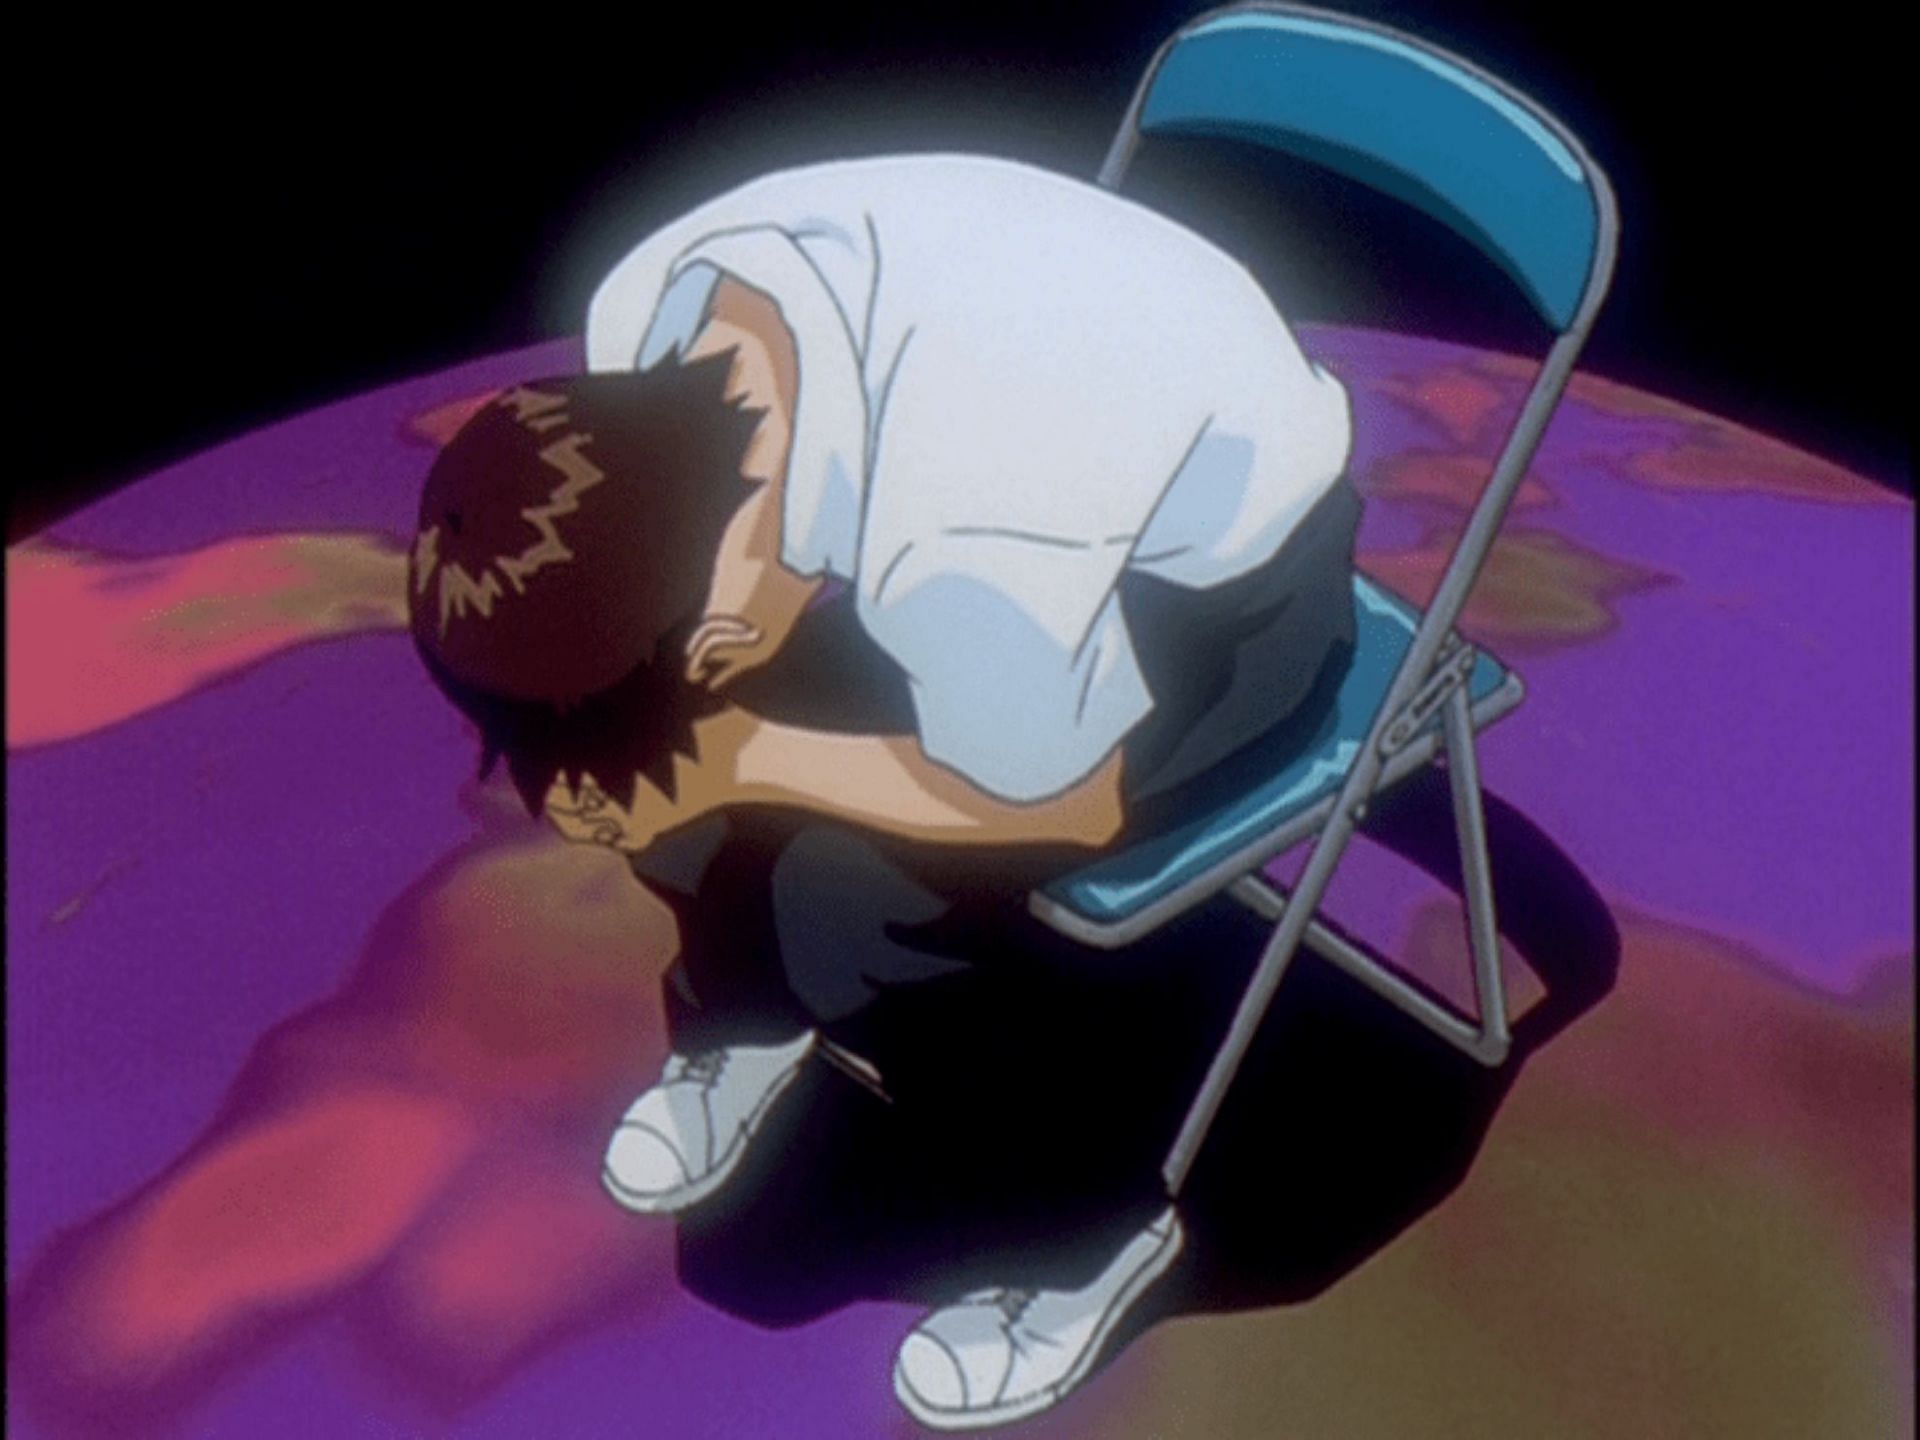 Shinji depressed in the chair (Image via Studio Gainax)